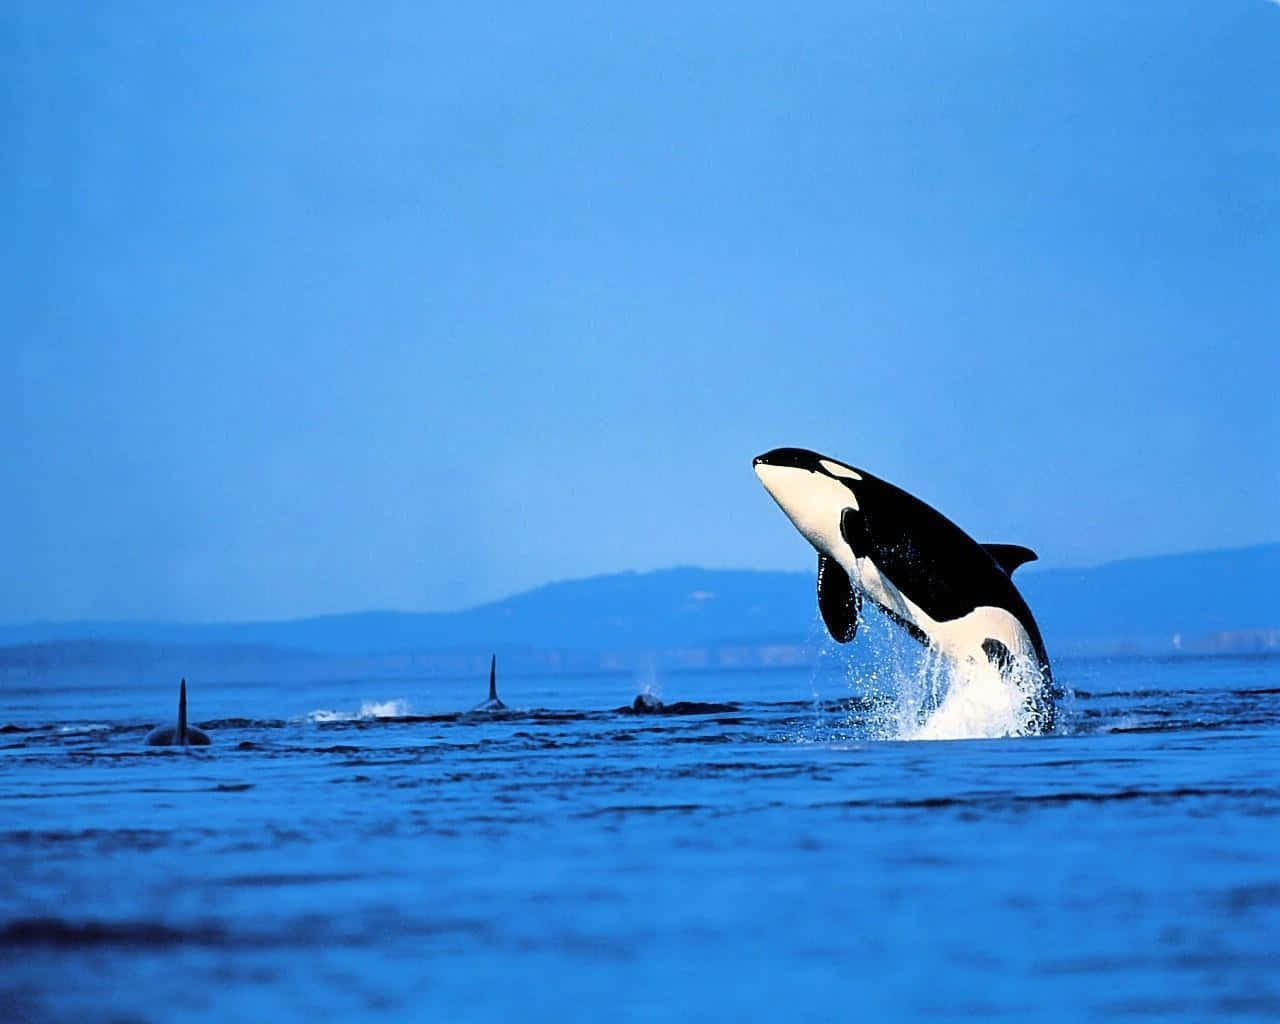 Imagende Una Orca Asesina Saltando Fuera Del Agua.